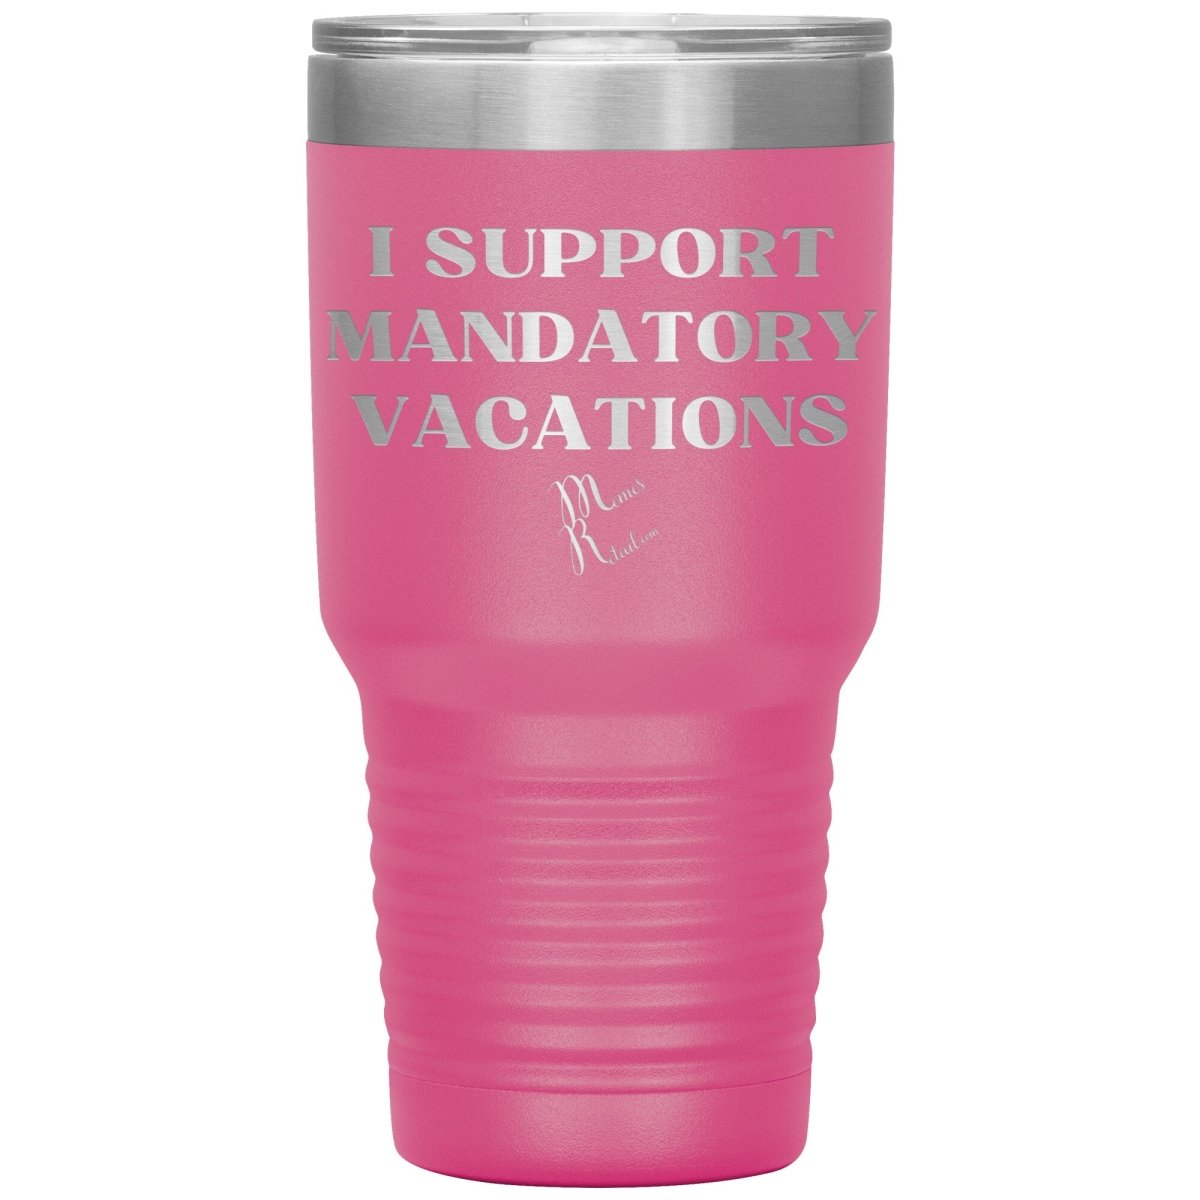 I support mandatory vacations Tumblers, 30oz Insulated Tumbler / Pink - MemesRetail.com